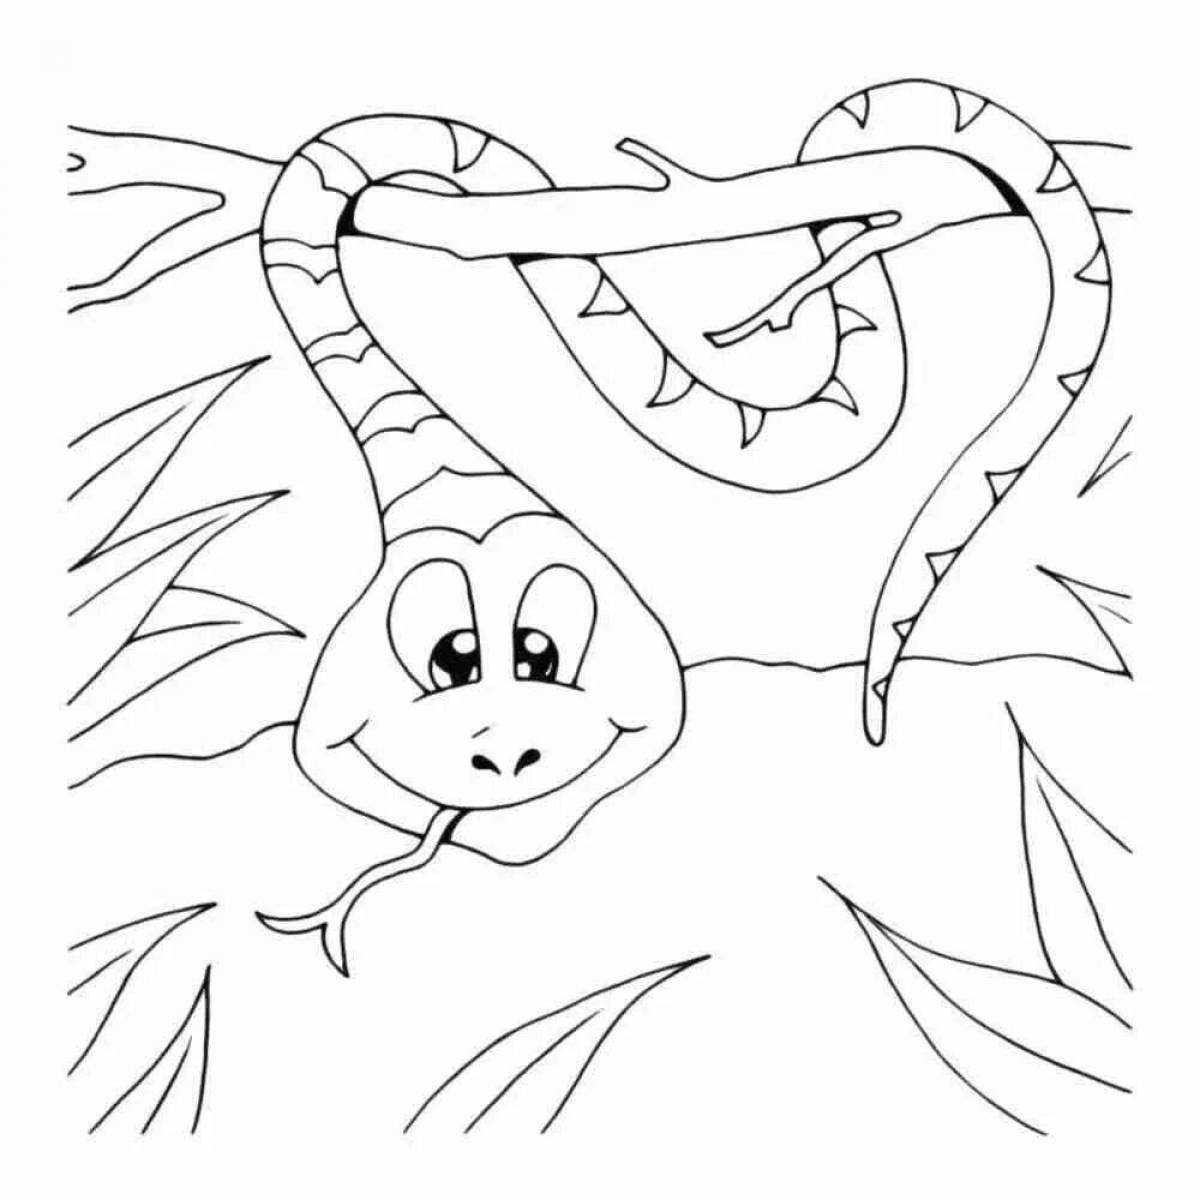 Креативная раскраска «змея» для детей 3-4 лет